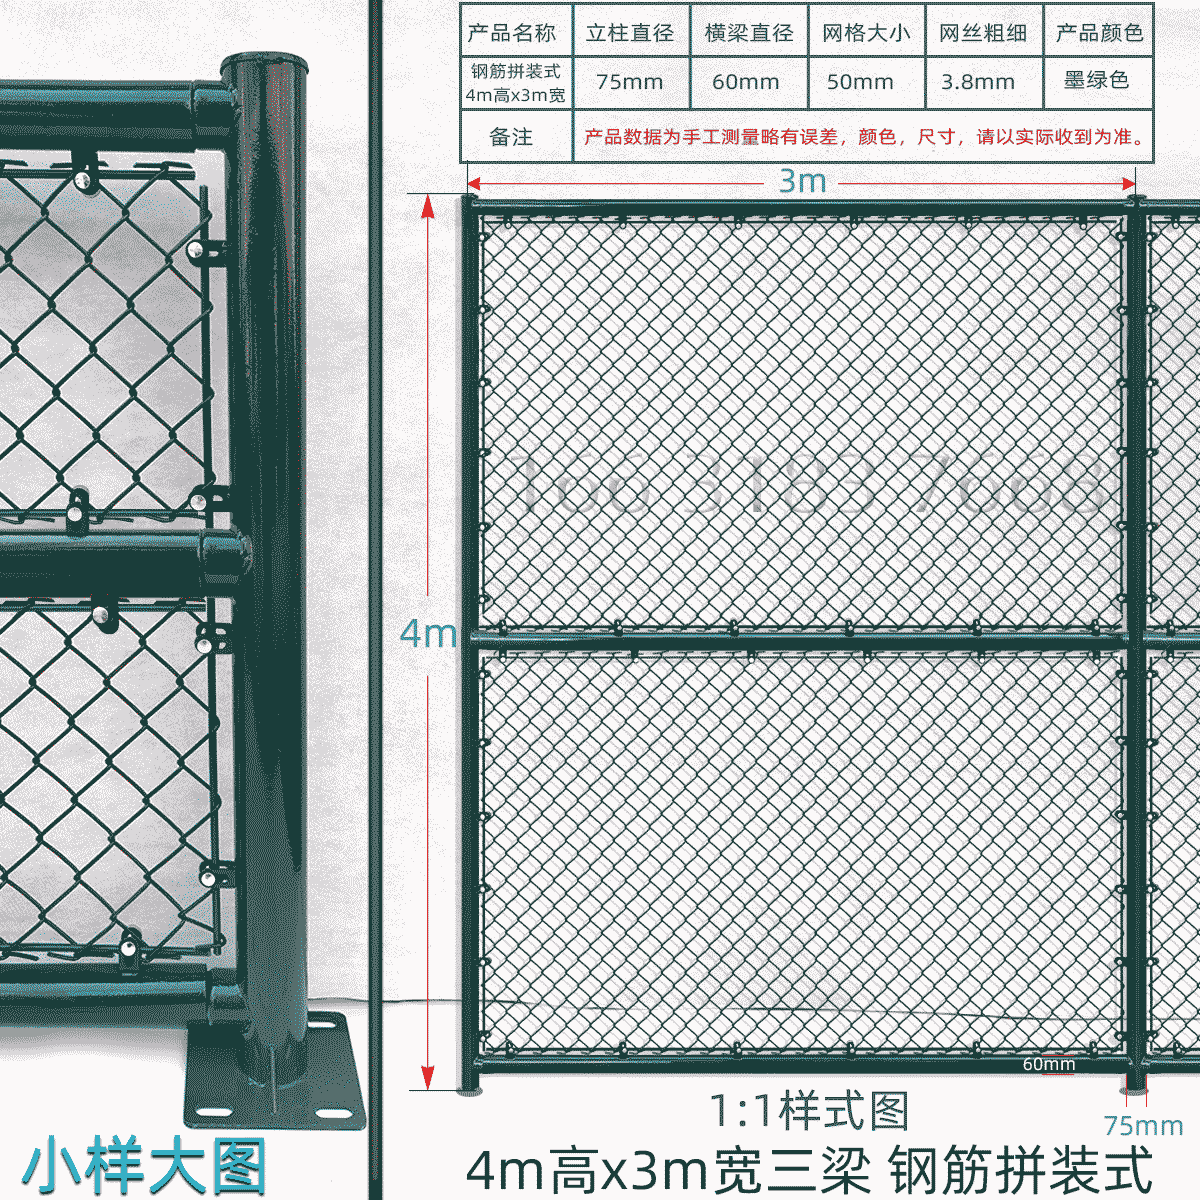 4m高x3m宽钢筋拼装式日子形球场围栏网